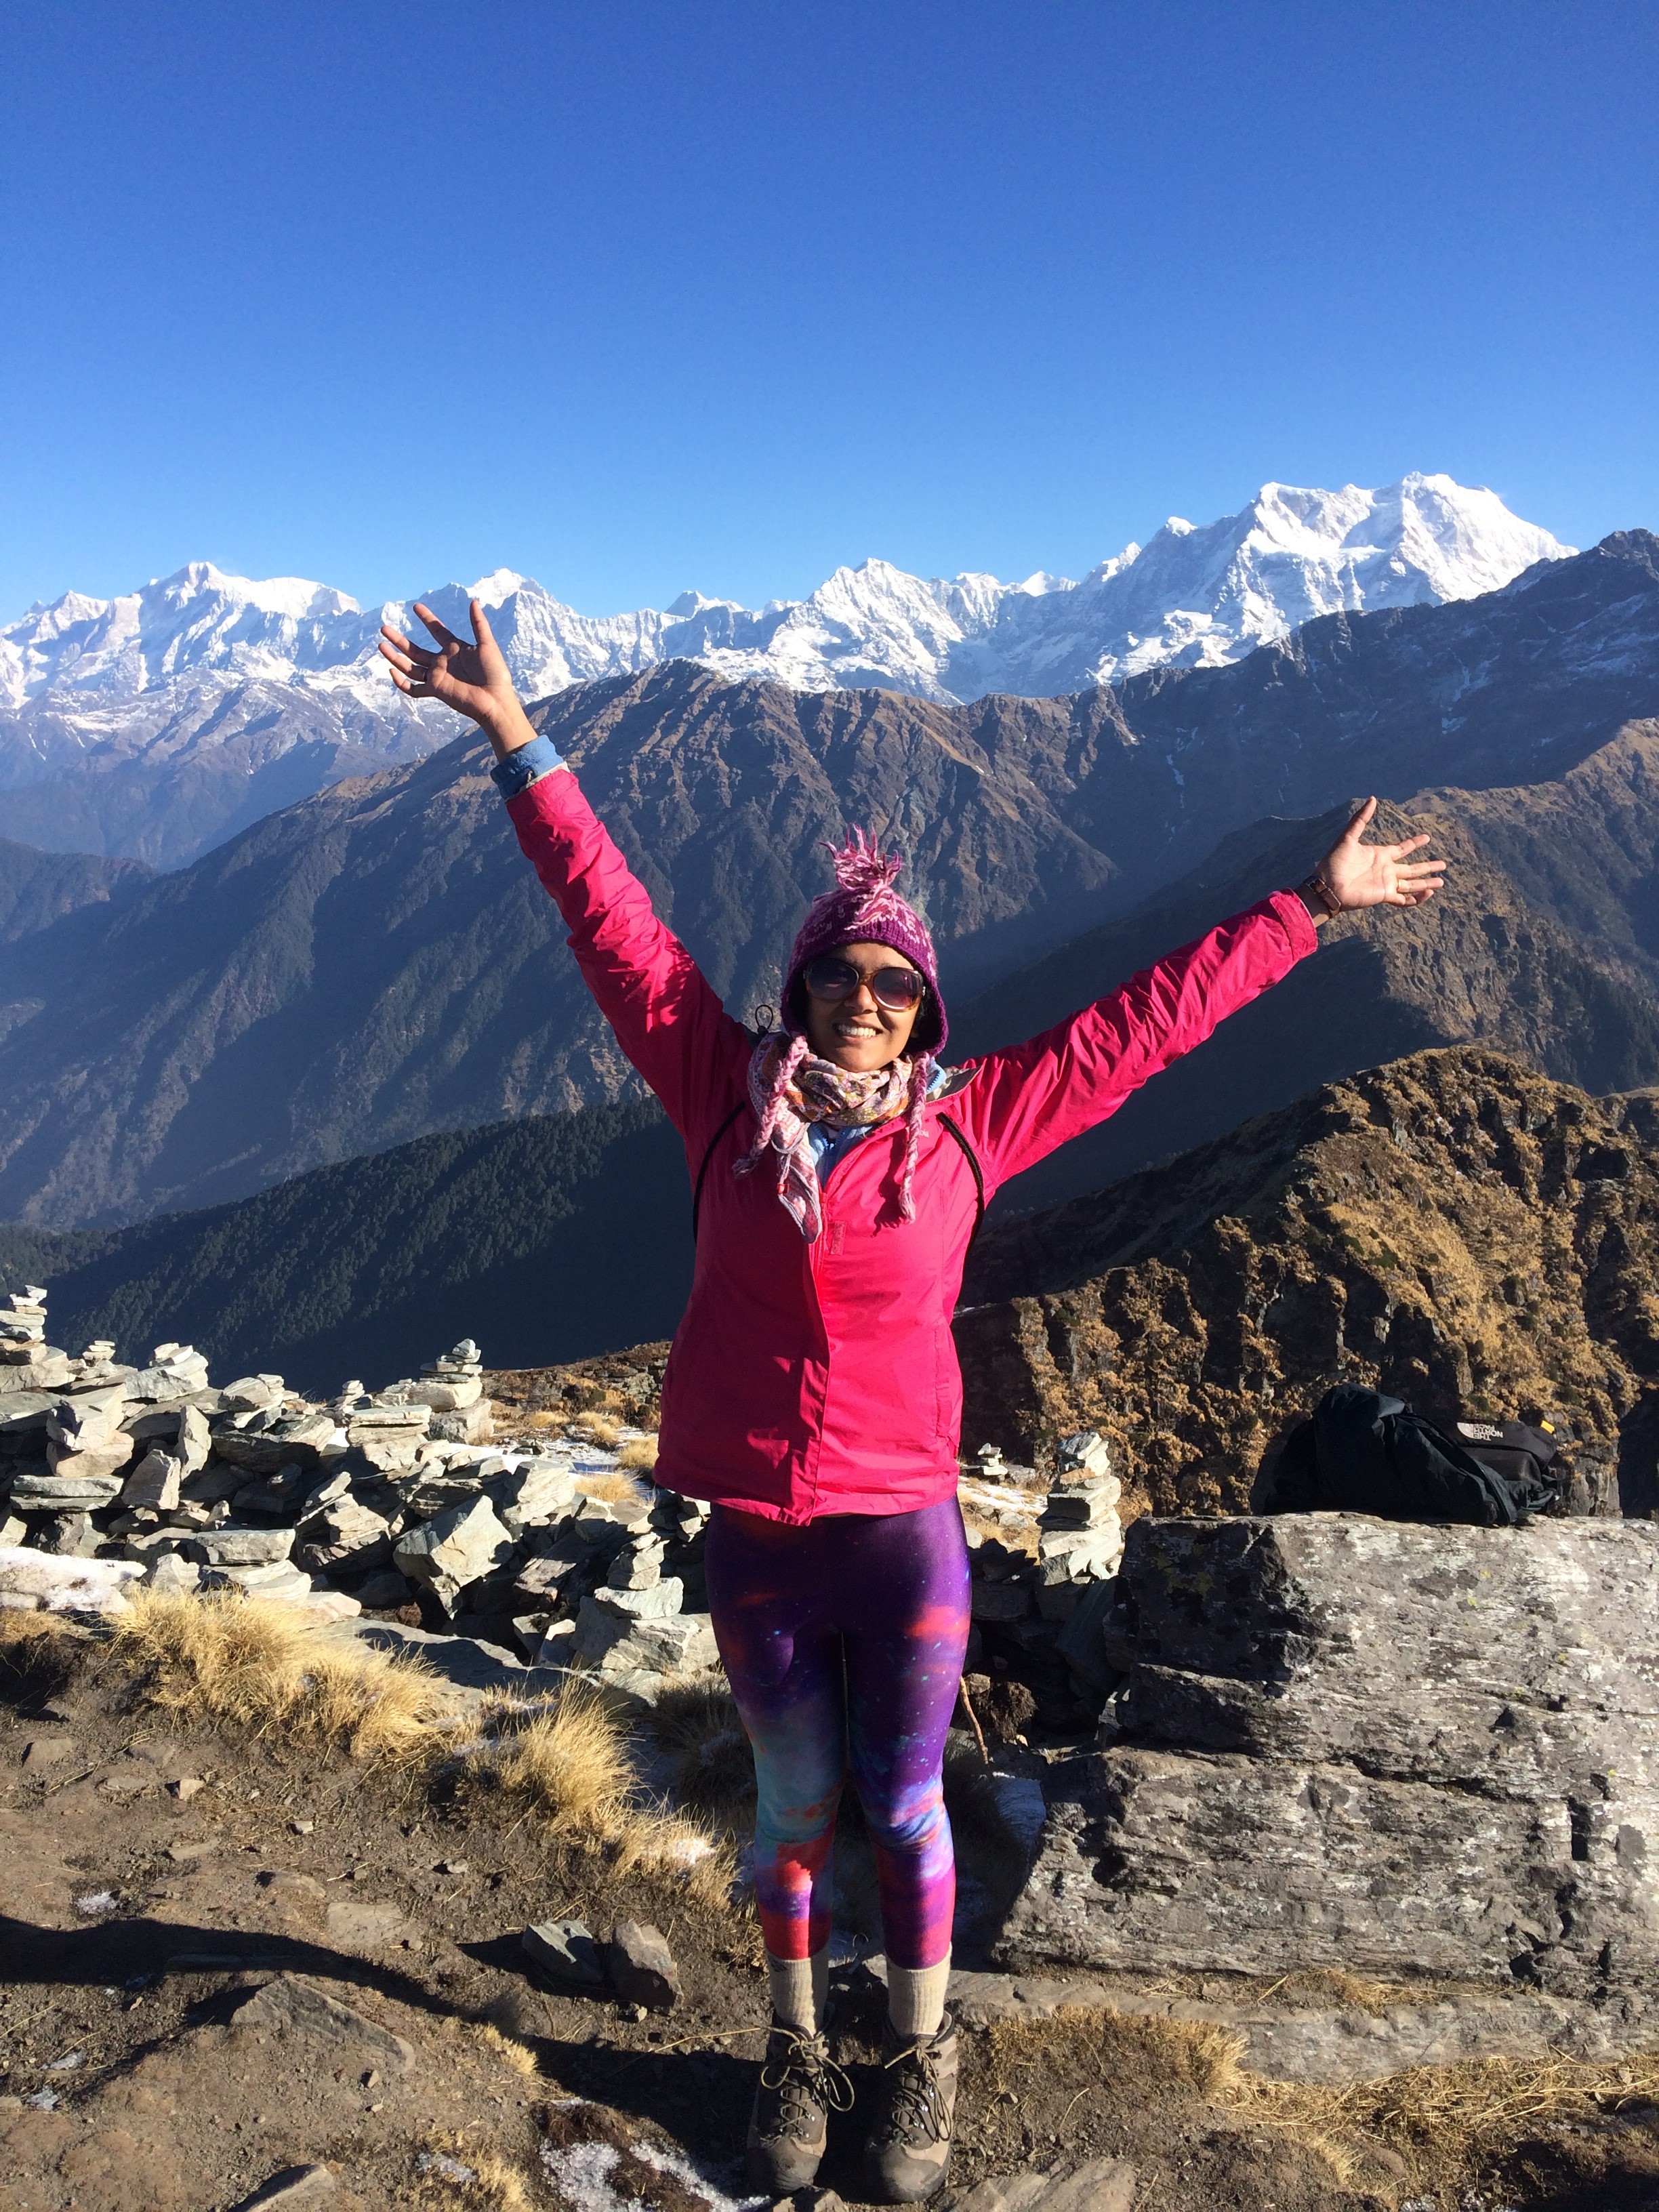 Courtesy photo of graduating ASU student Swatio Shrestha on top of a Himalayan peak.